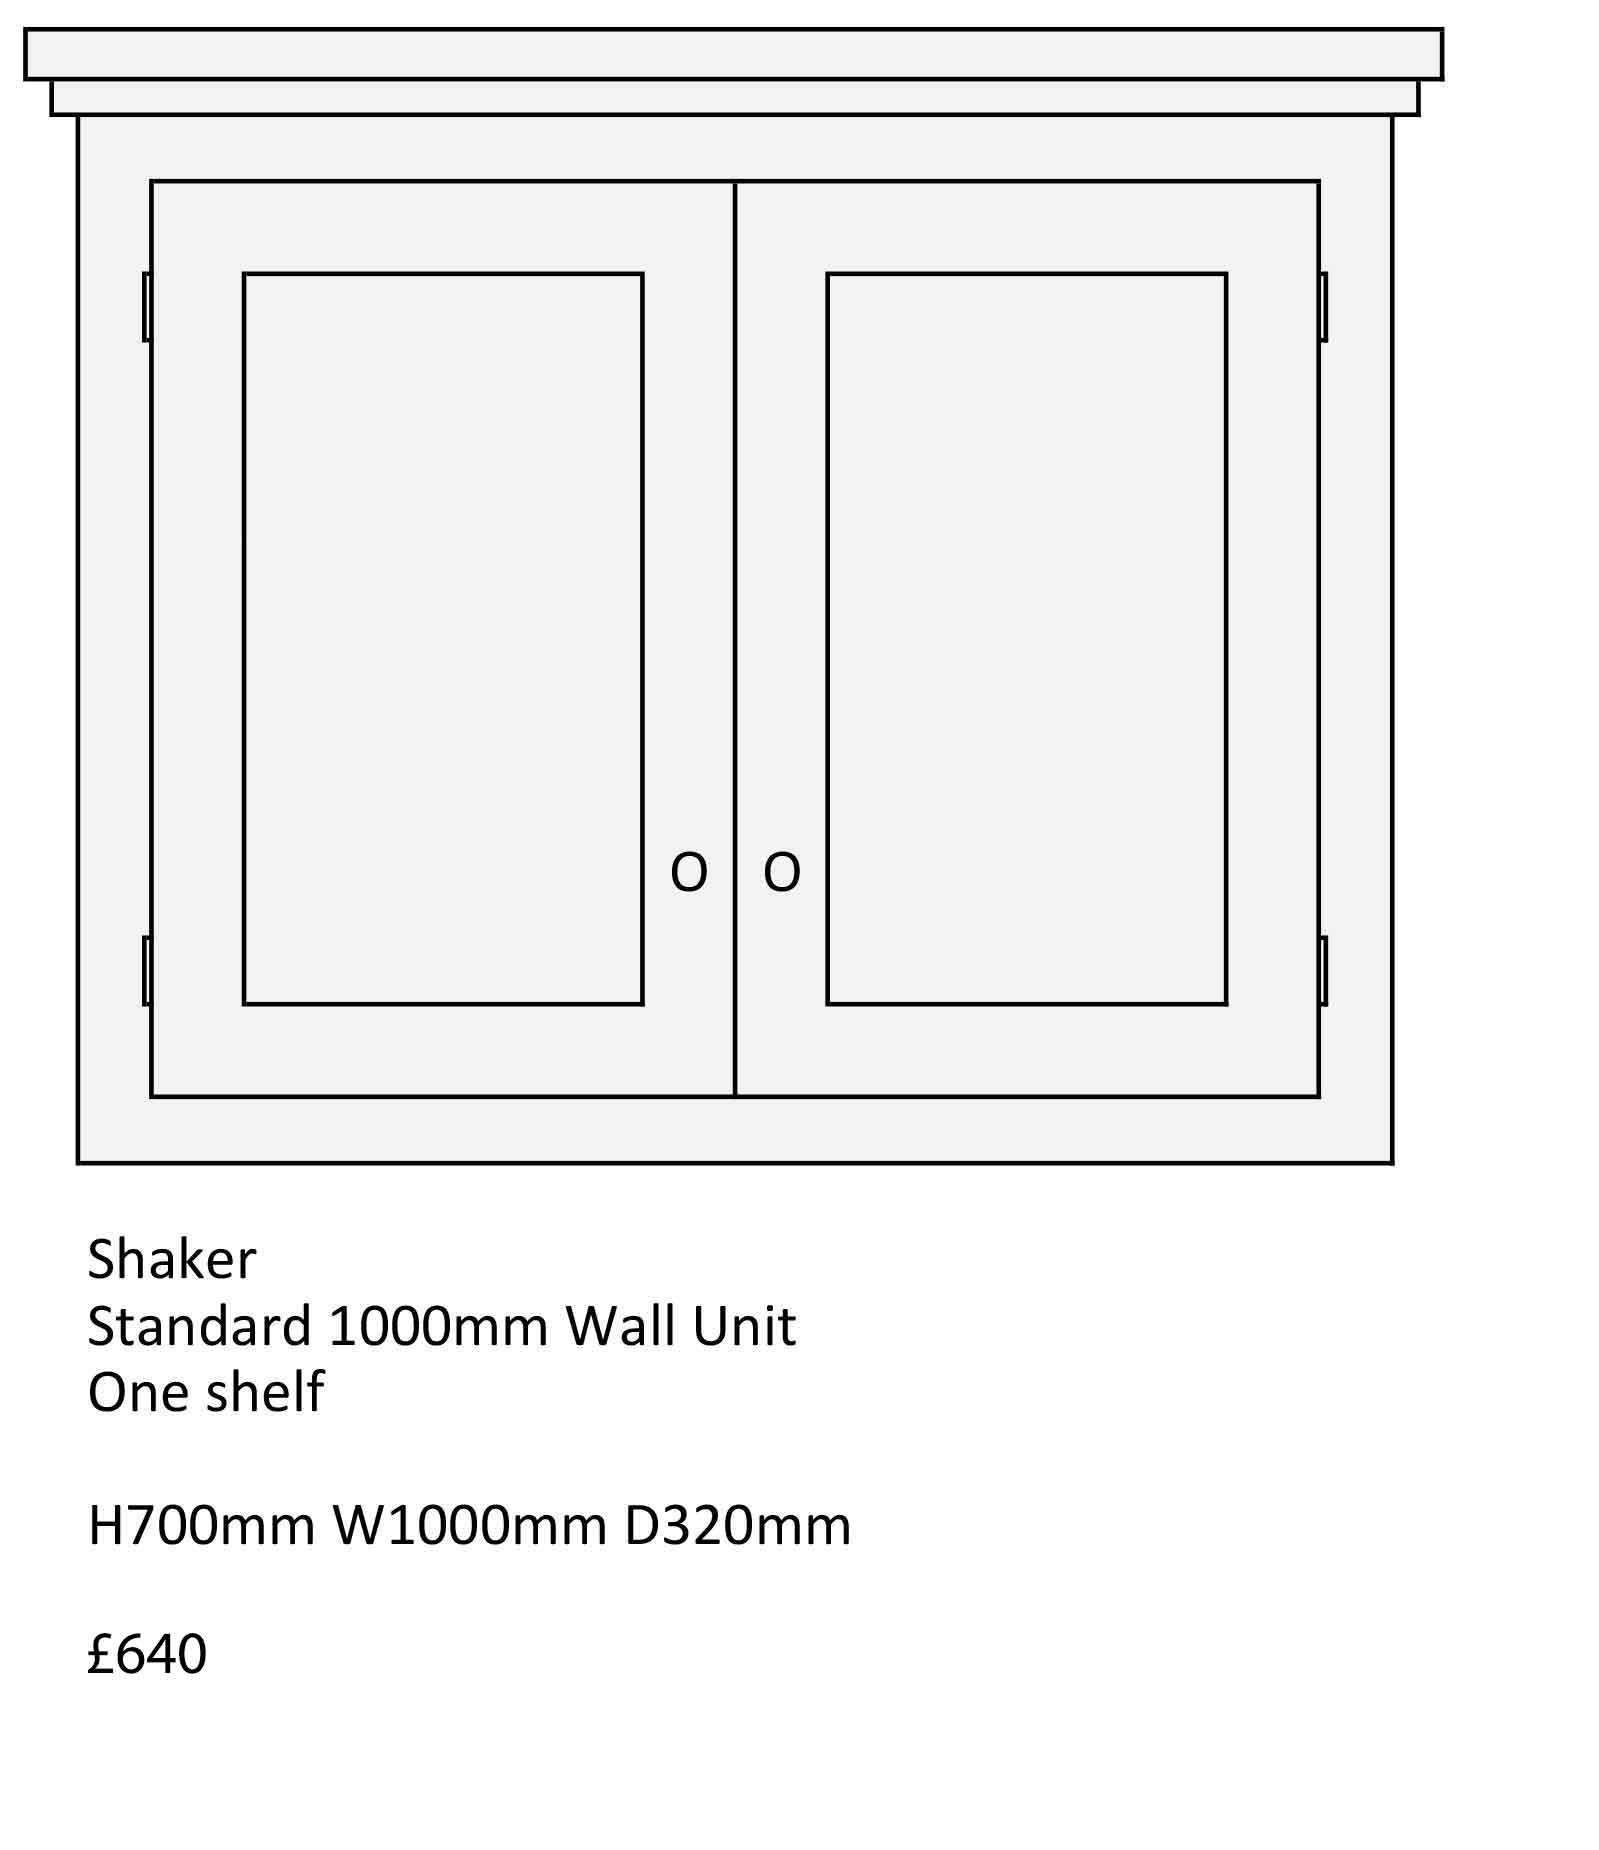 Shaker style kitchen wall unit, standard 1000mm wall unit with one shelf. Solid wood, oak Kitchen units from The Bramble Tree